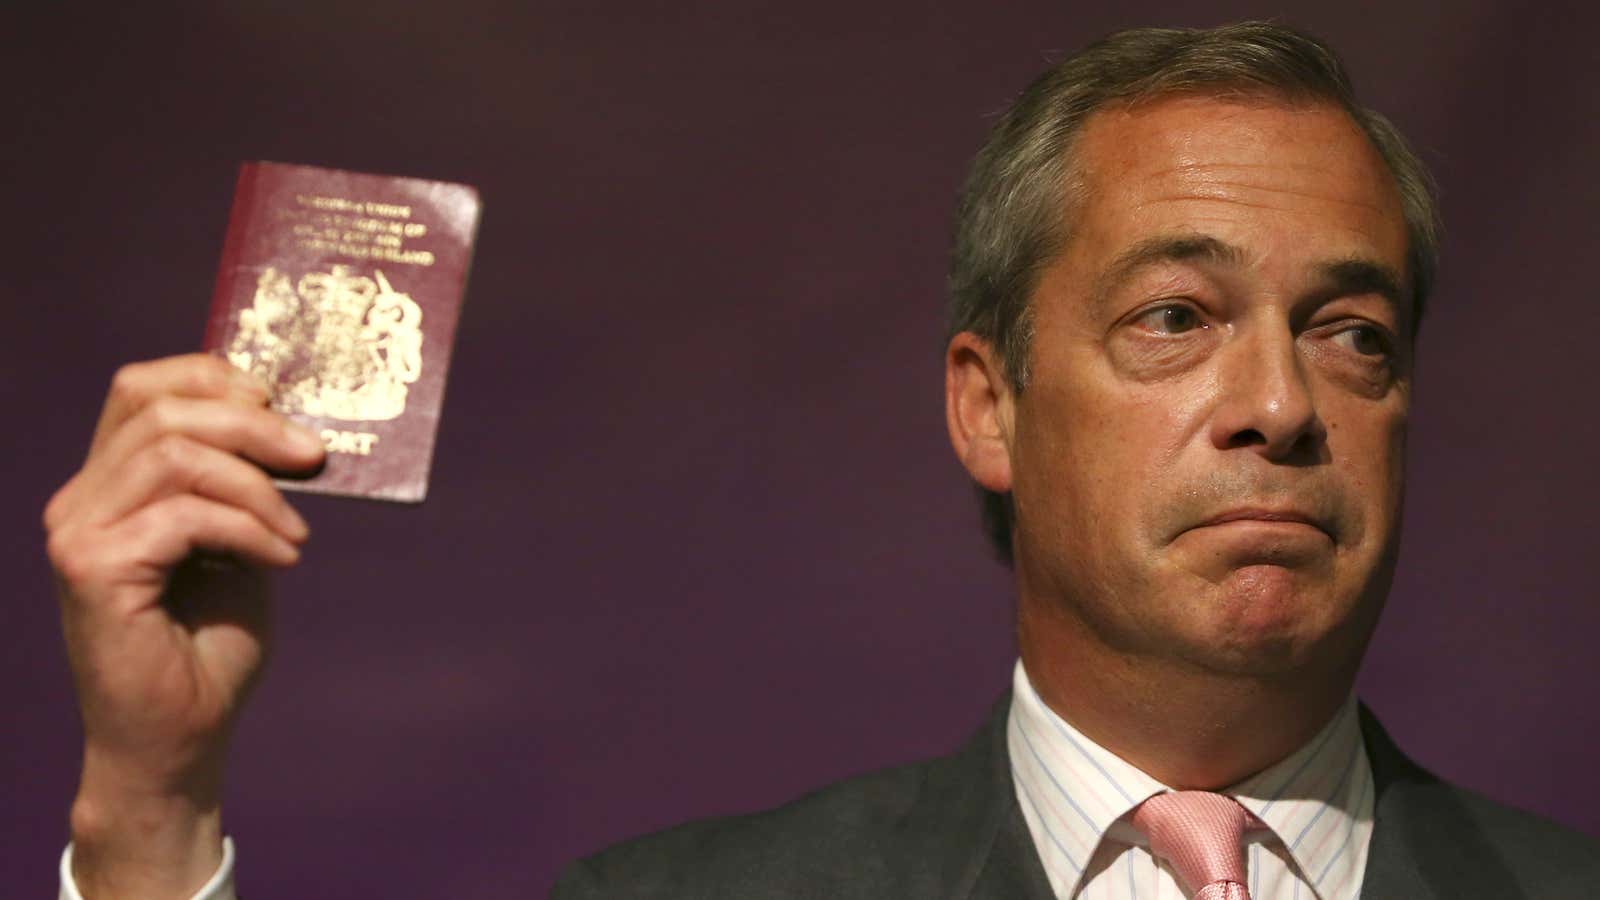 Brexiteer Nigel Farage awaits the return of navy blue UK passports.